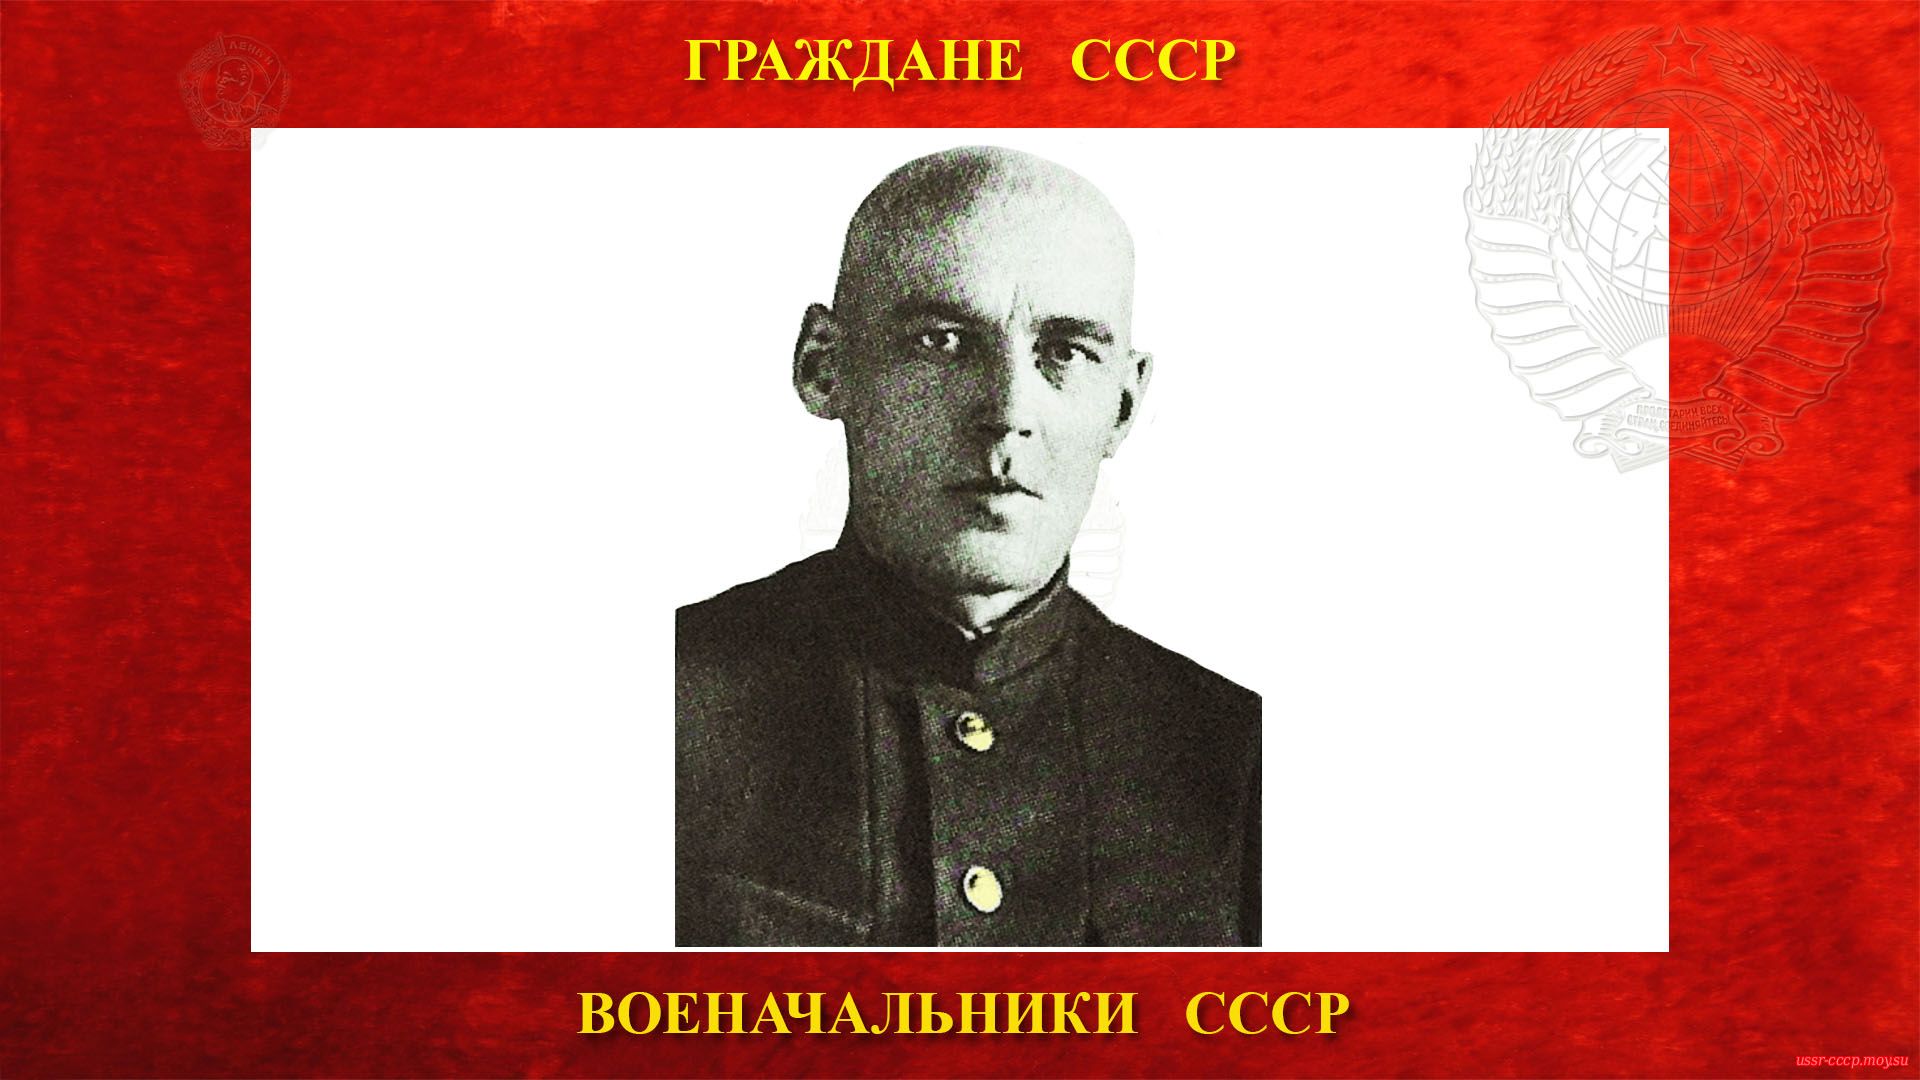 Васильев Александр Васильевич — Советский военачальник — Флагман 2 ранга (02.03.1887 — 04.05.1938 биография))